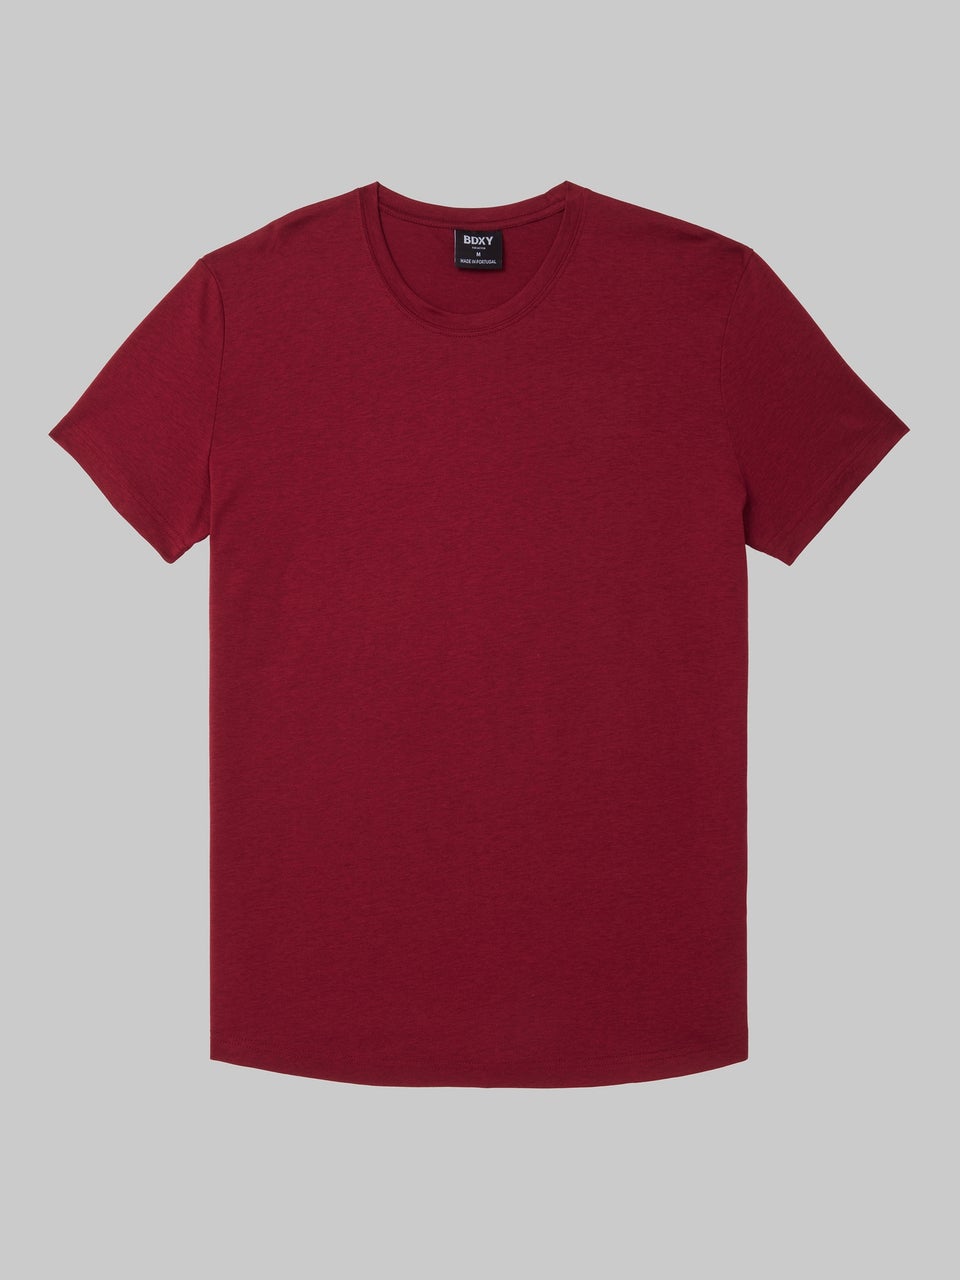 'The Actor' T-shirt - Burgundy